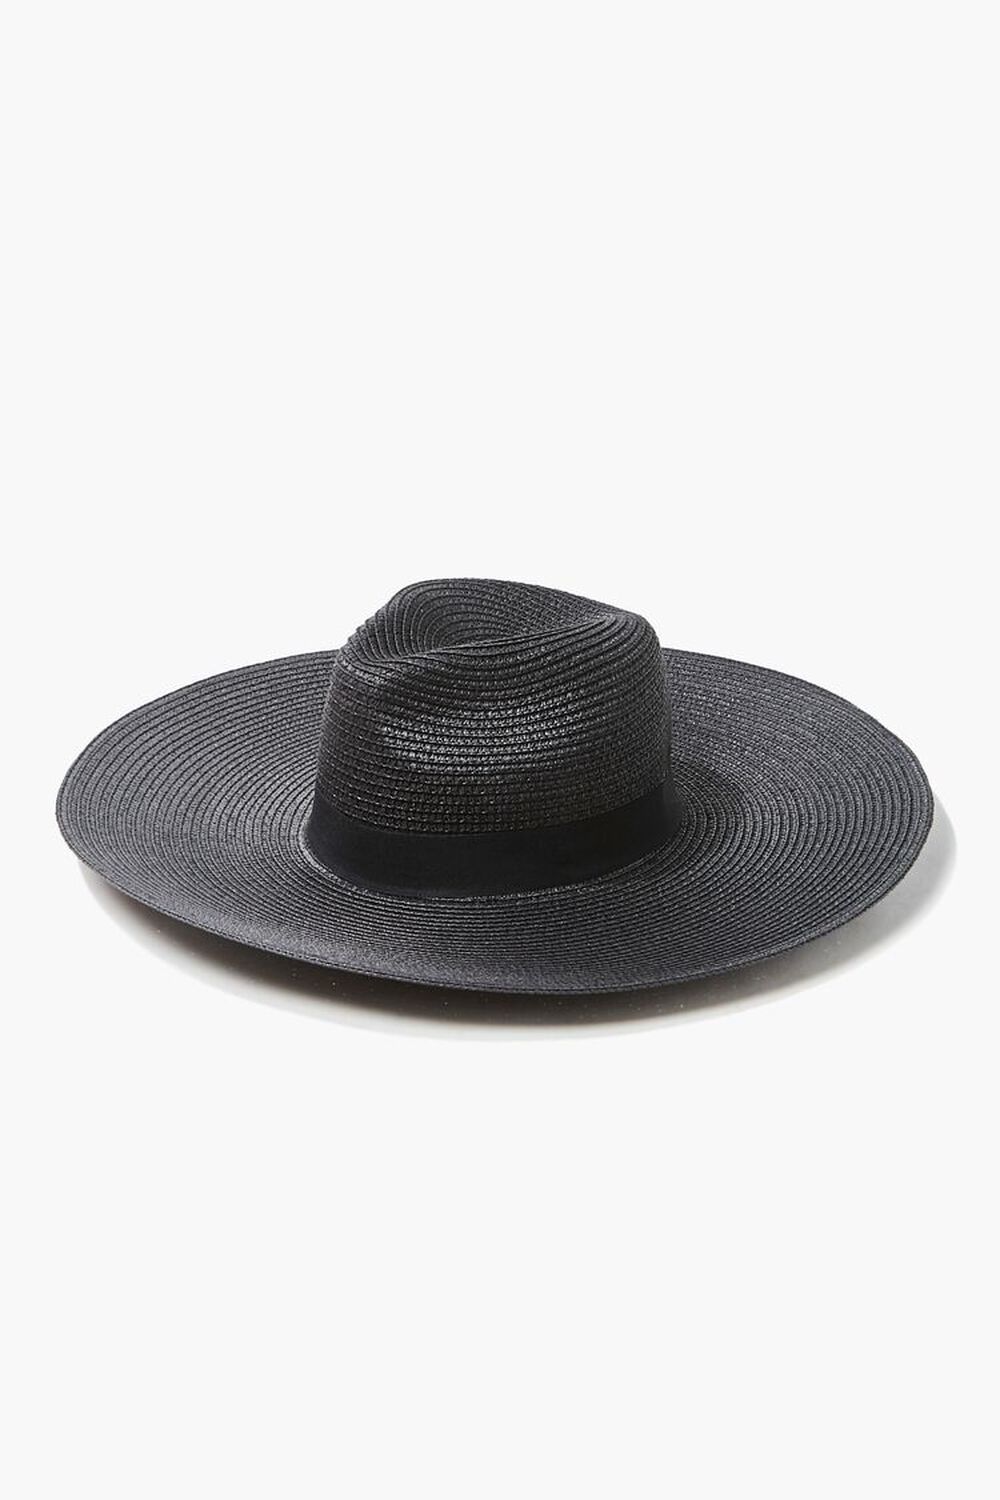 Faux Straw Panama Hat, image 2